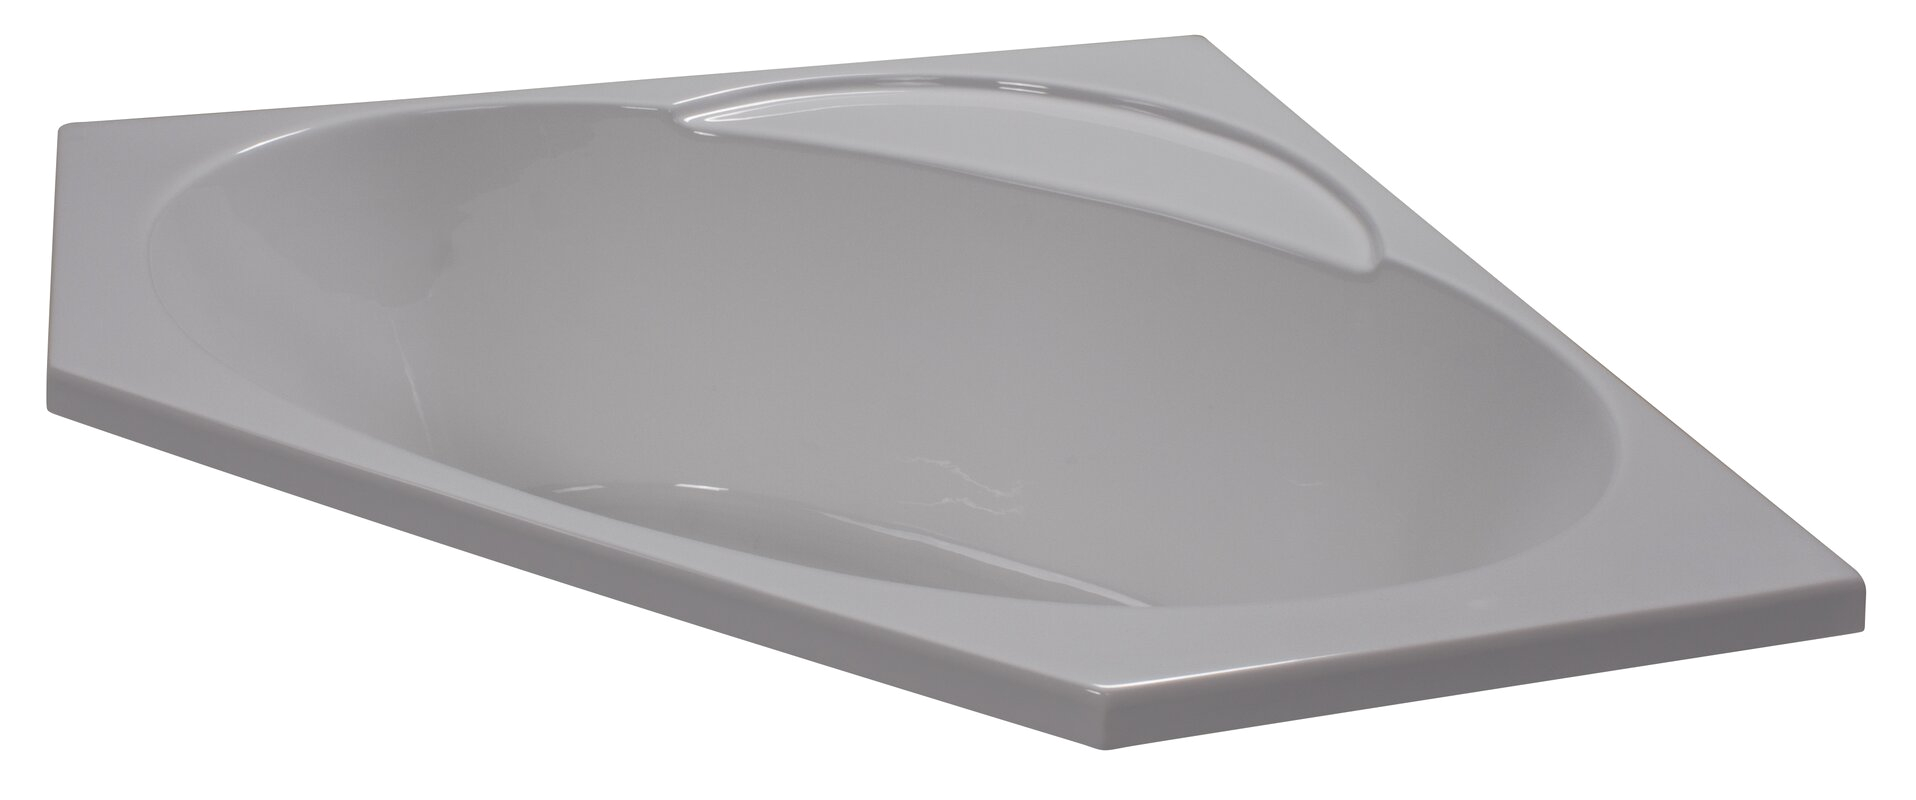 american acrylic 48 x 48 soaker corner bathtub xcx1120